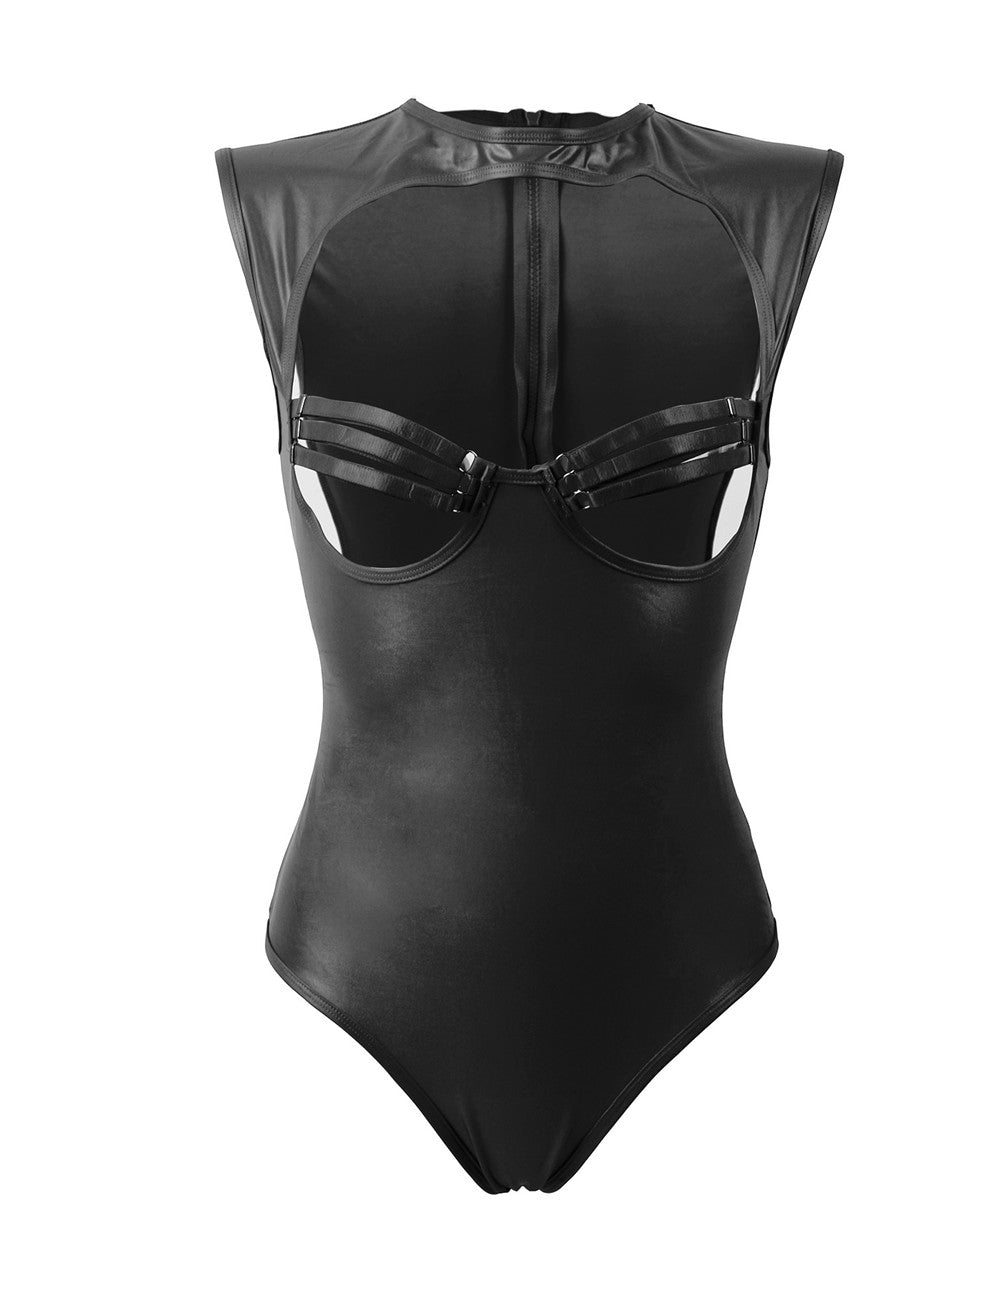 Leather Bodysuit Stylish Open Bust Plus Size Teddy Lingerie